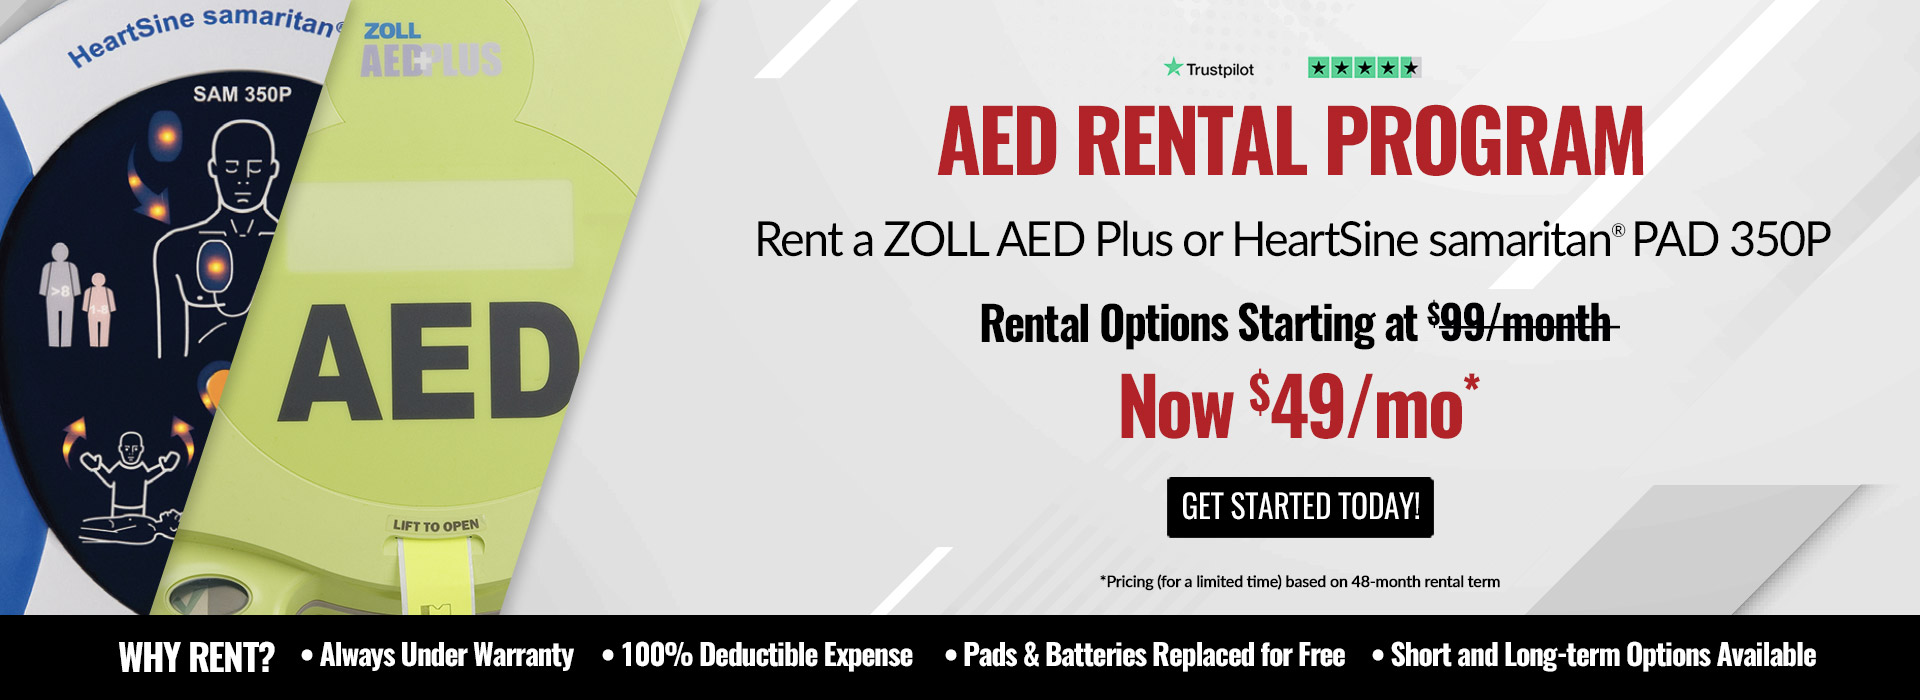 Rent a Heartsine samaritan 350P or ZOLL AED Plus for $49/mo. $49/mo based on 4-year rental term